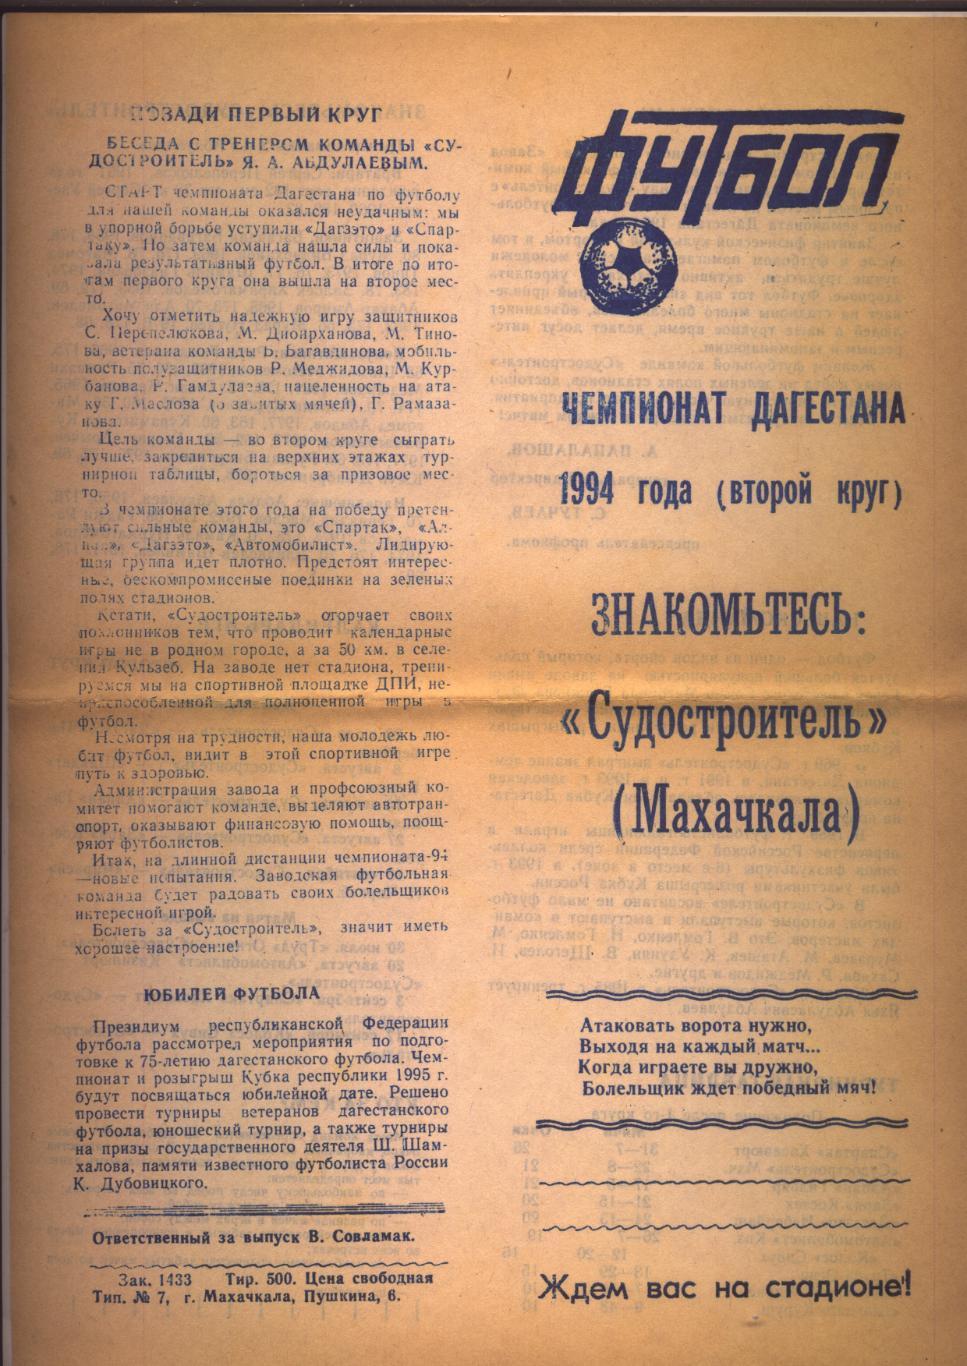 Буклет Чемпионат Дагестана 1994 года (2-й круг) Судостроитель Махачкала